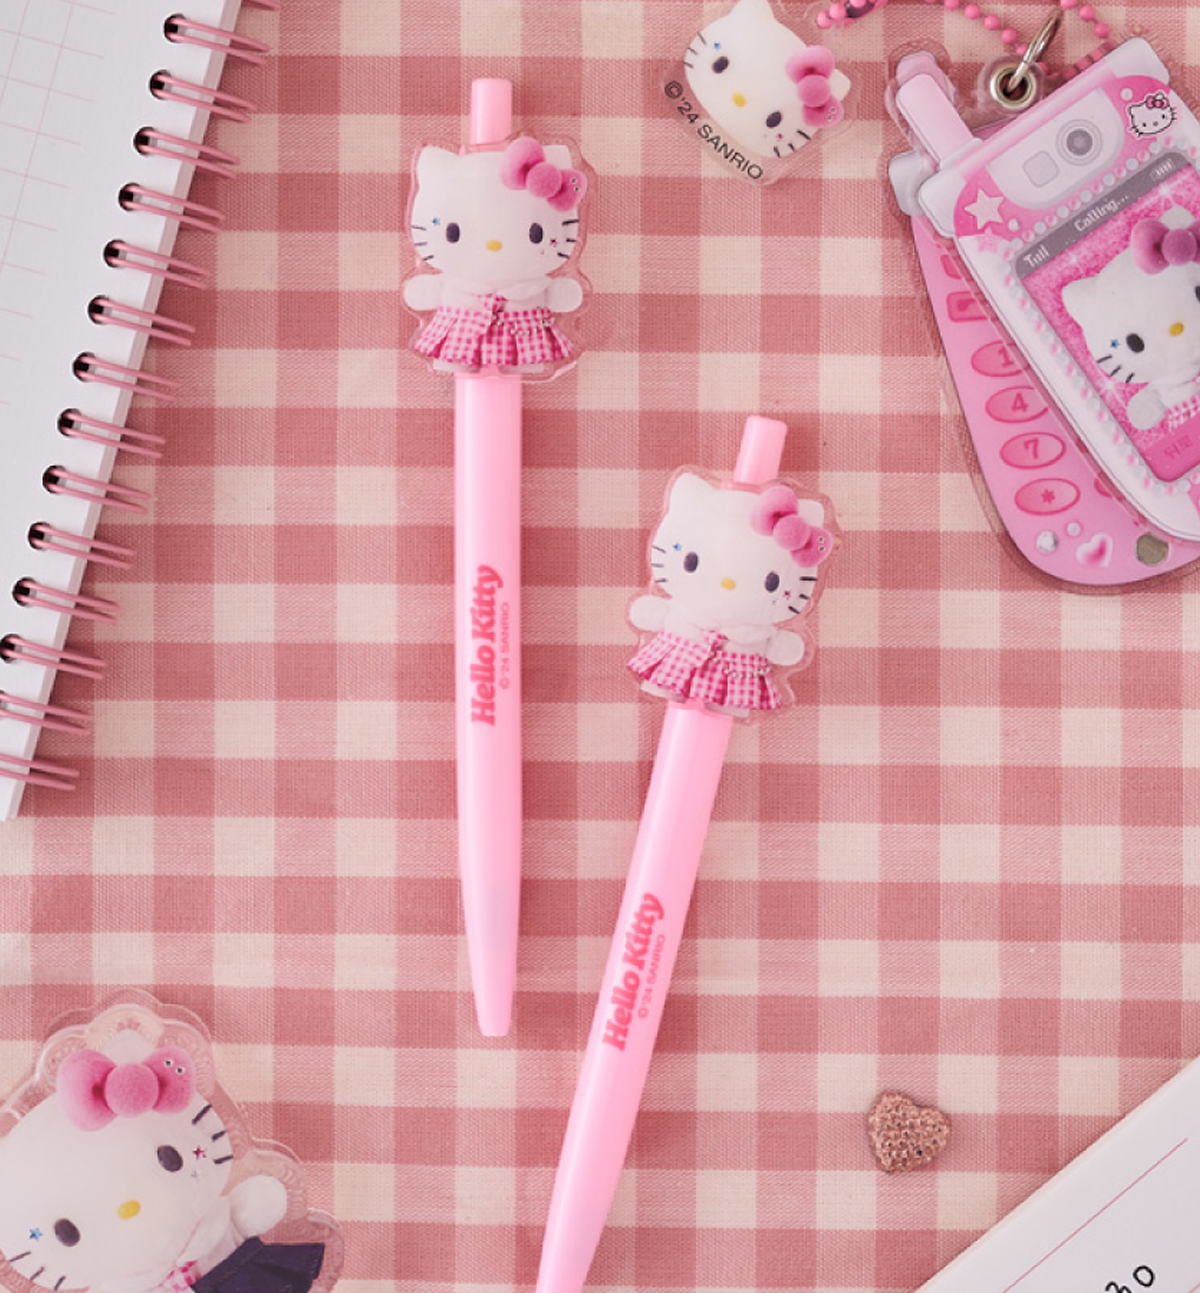 High Teen Hello Kitty Acrylic Gel Pen